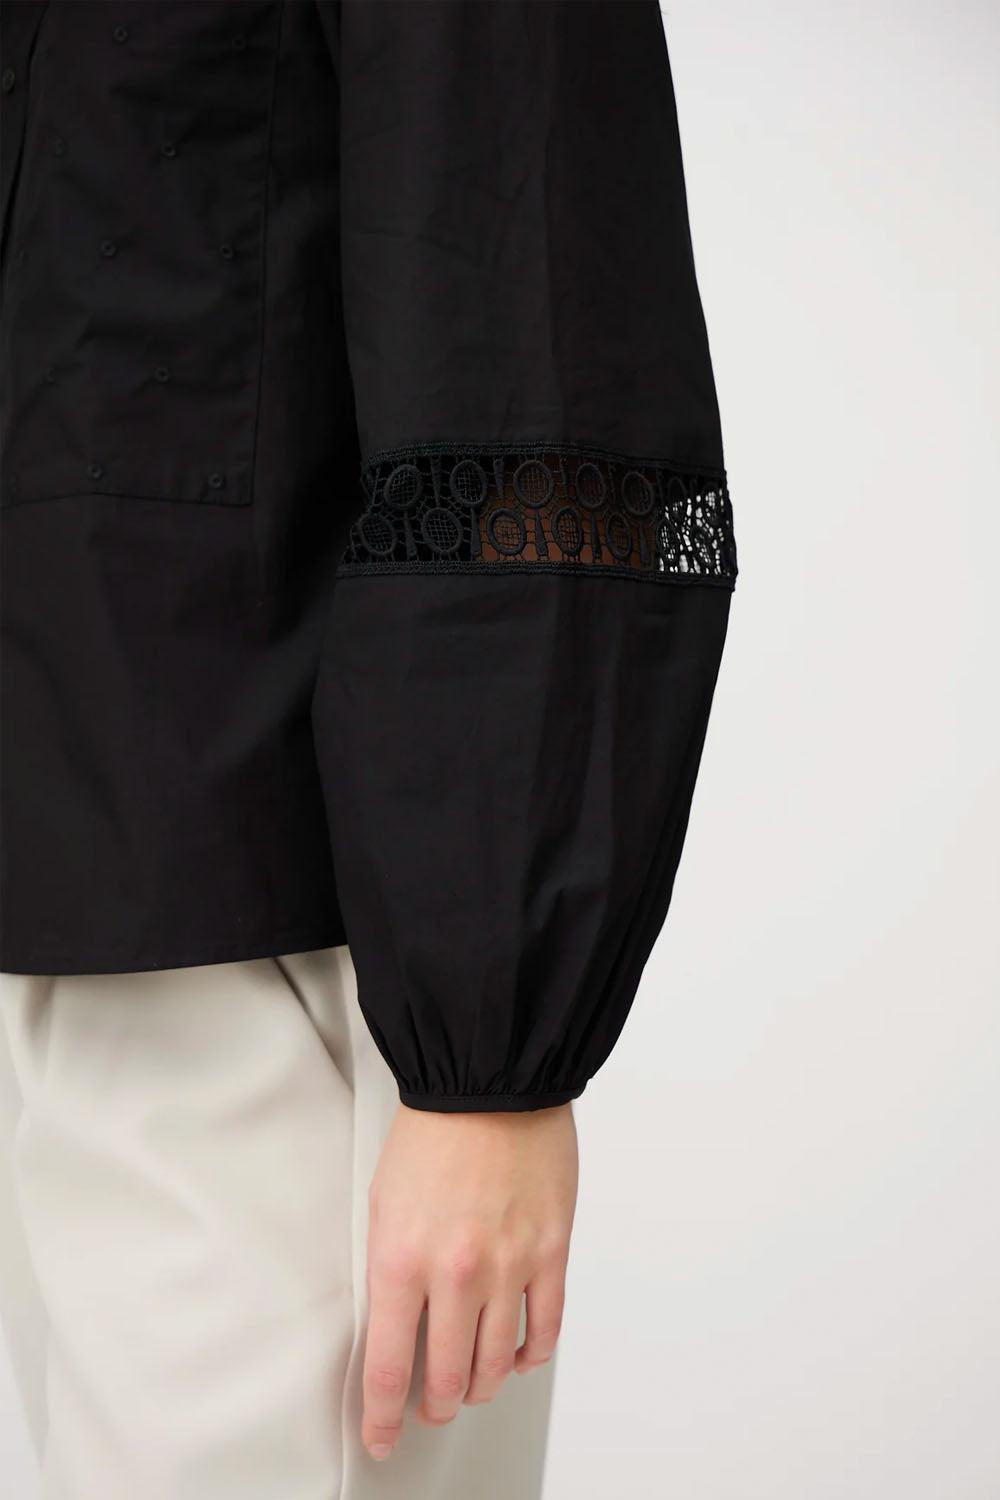 Tiffany Shirt Black